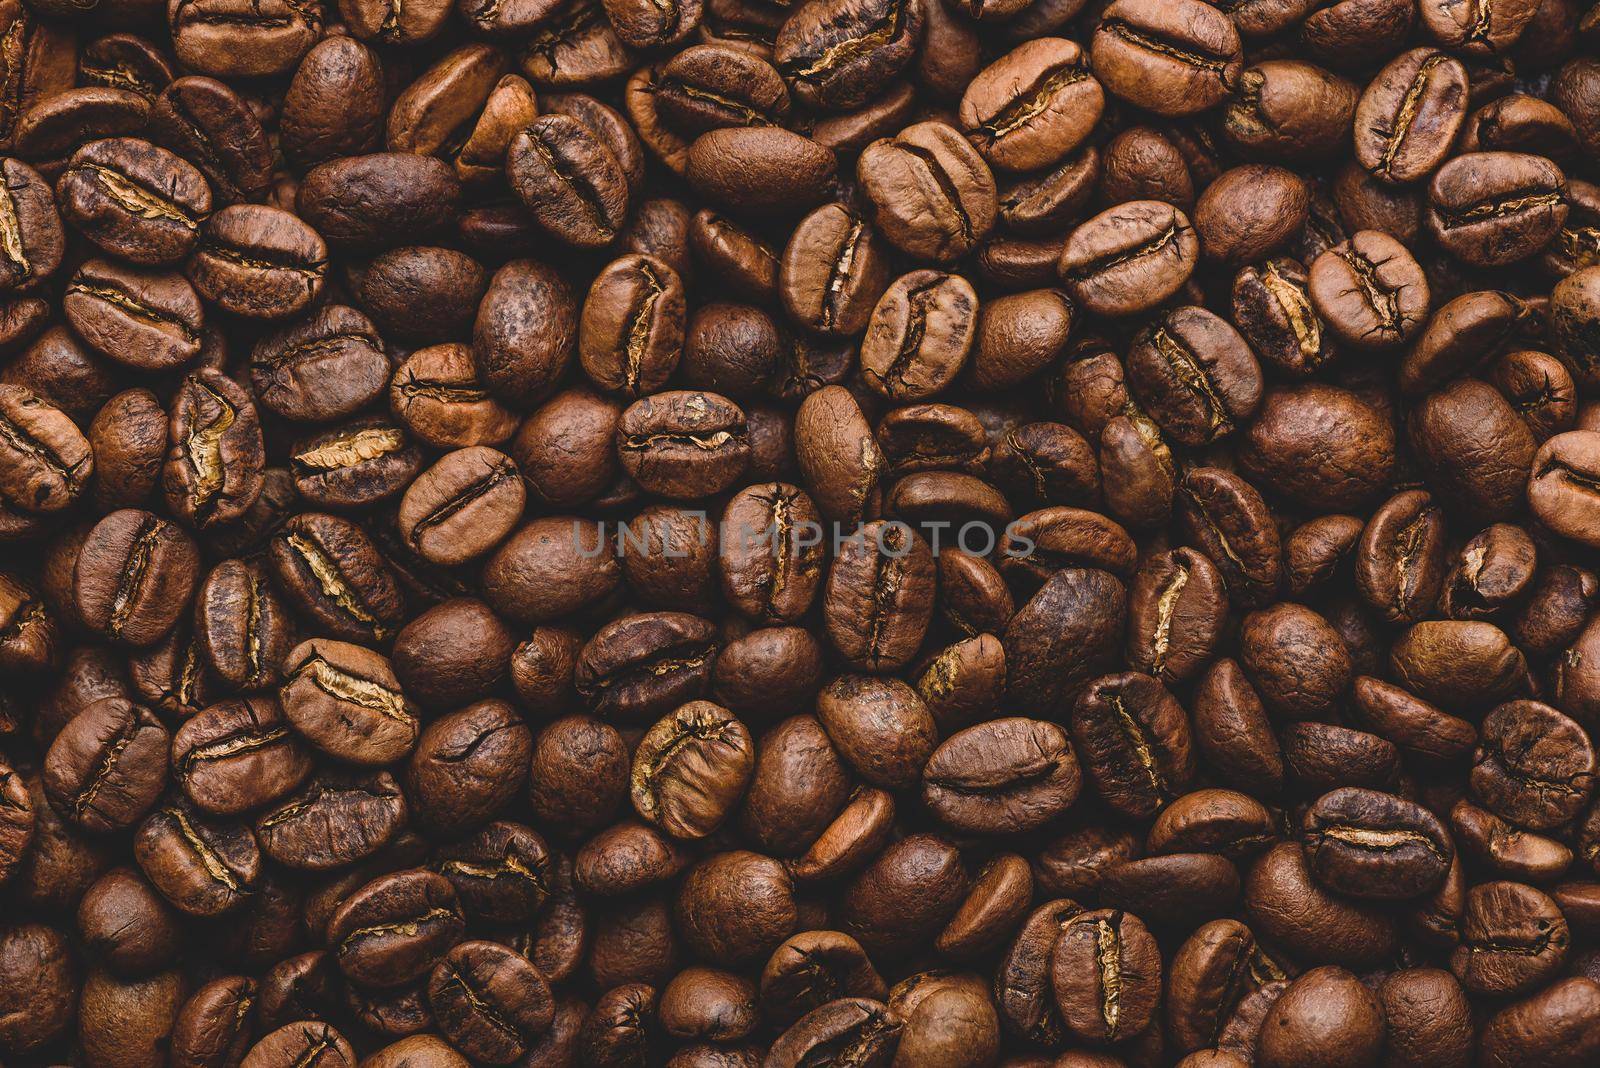 Fresh roasted coffee beans by Seva_blsv